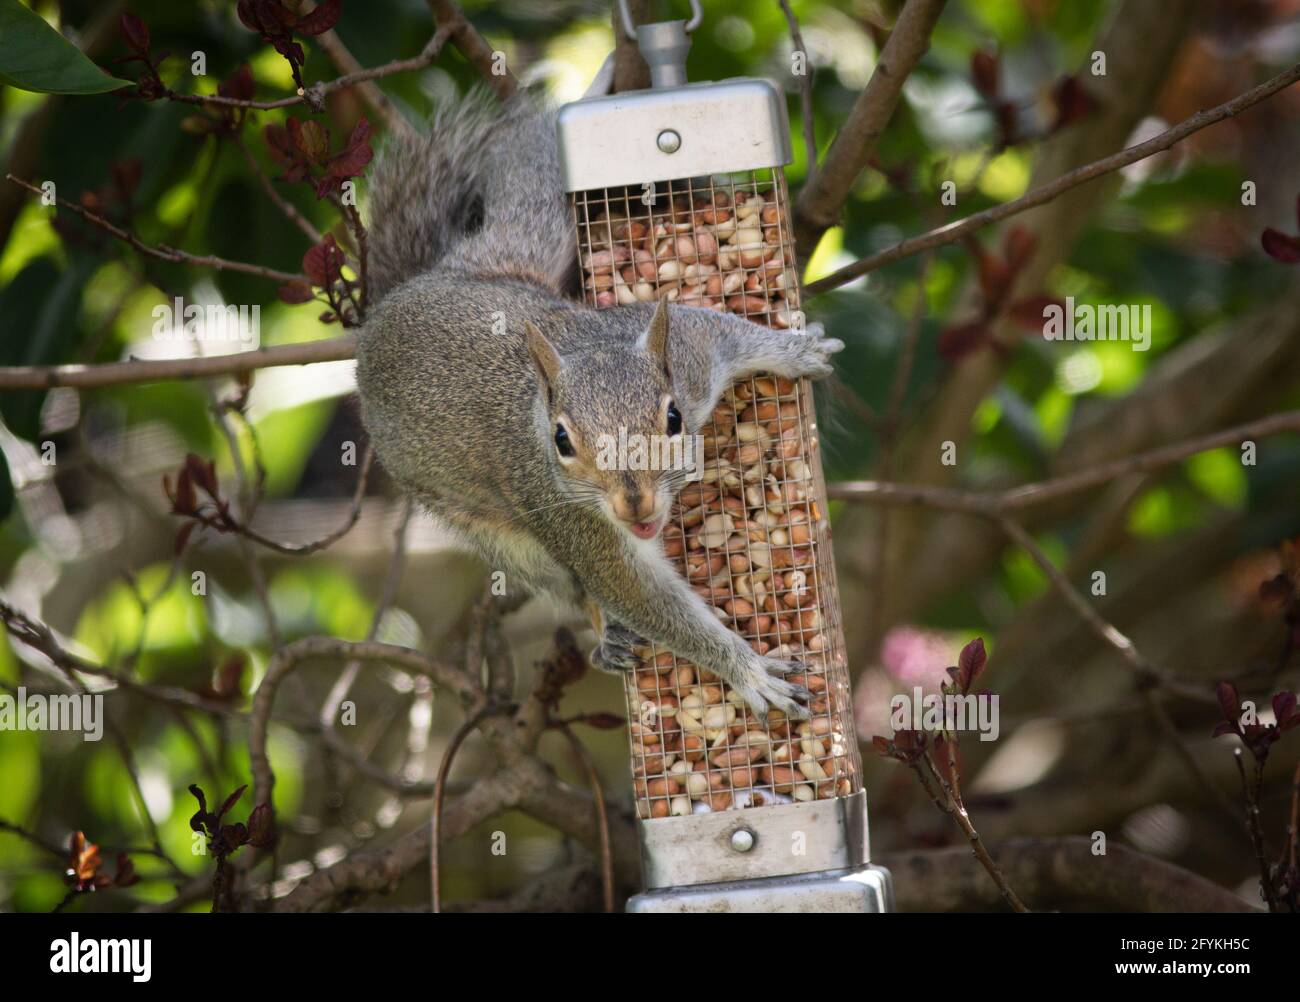 A squirrel on a bird feeder in a suburban garden in Worcestershire, UK. Stock Photo